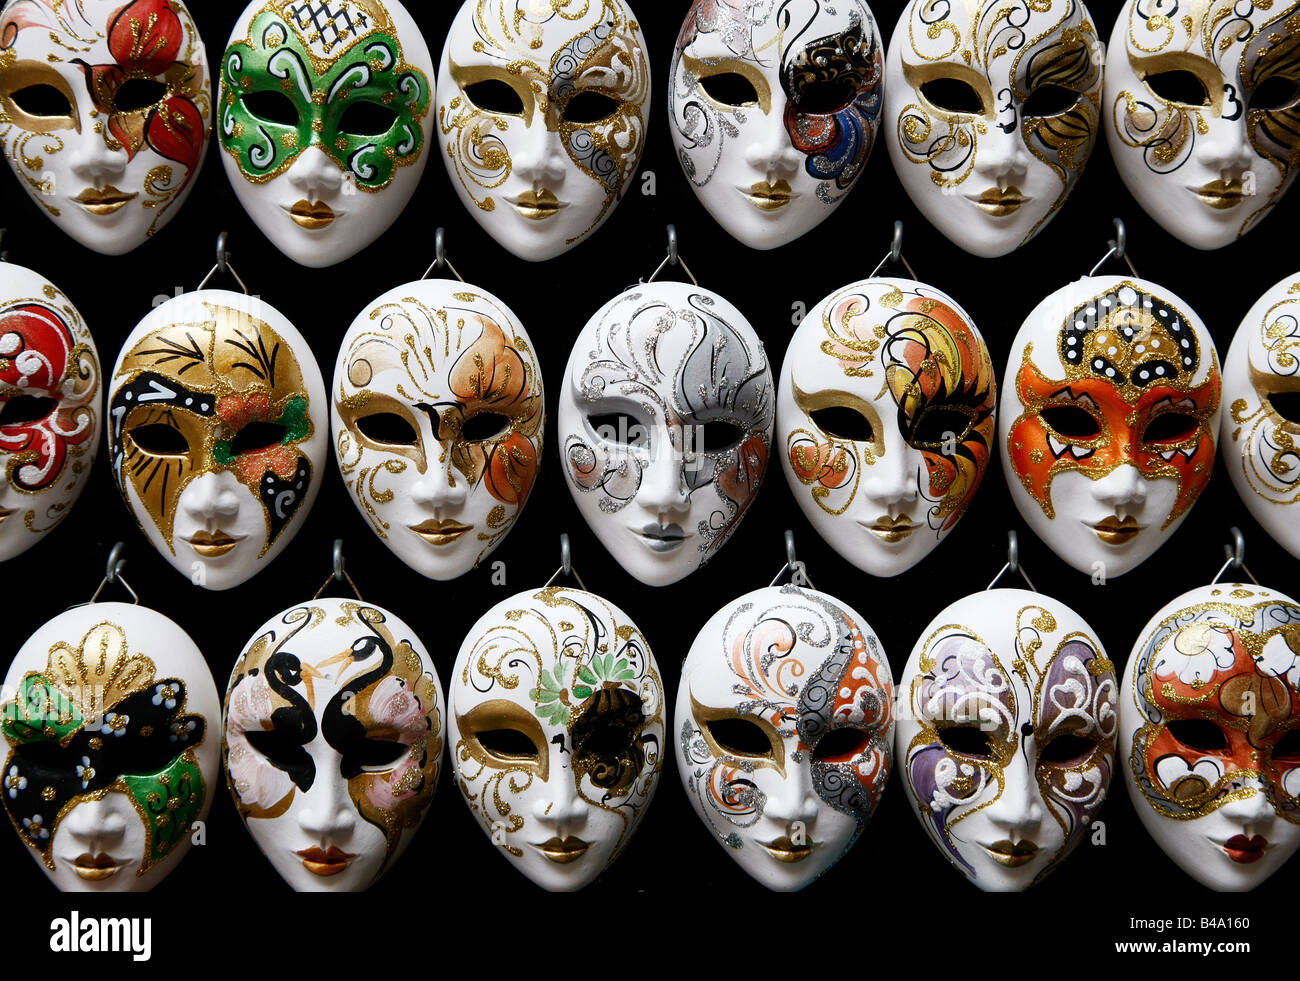 Mascaras decorativas fotografías e imágenes alta resolución - Alamy